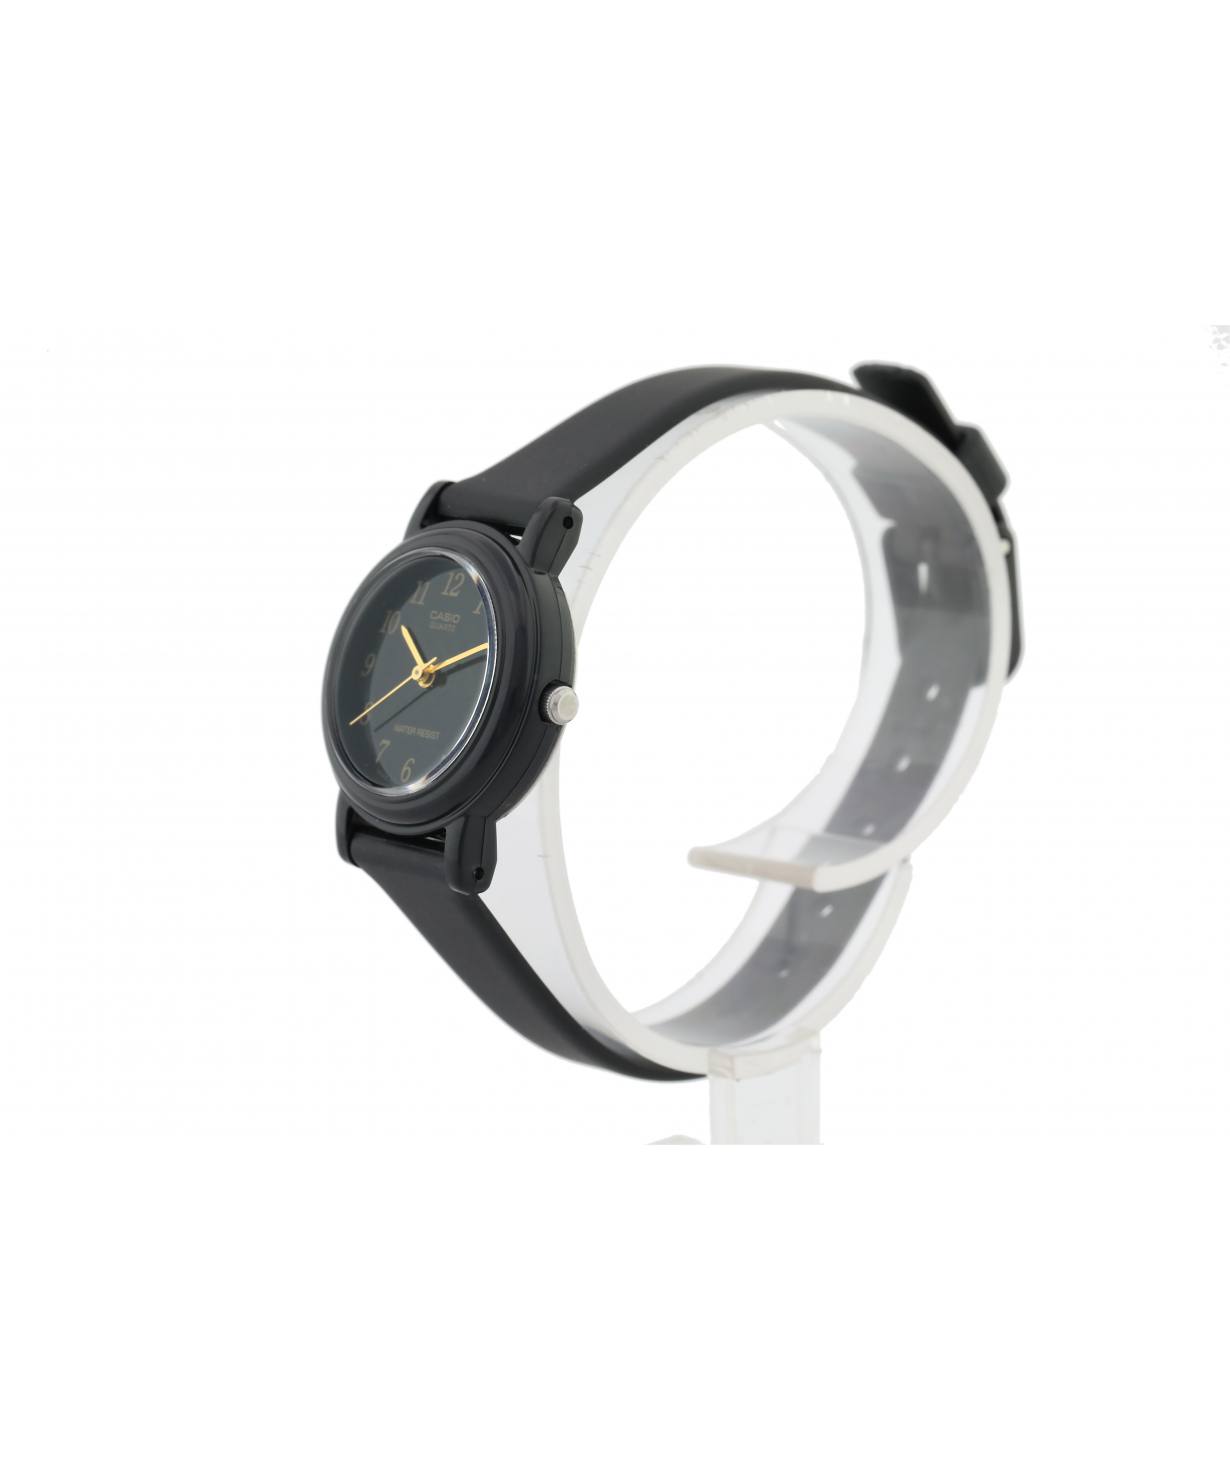 Ժամացույց  «Casio» ձեռքի   LQ-139AMV-1ELDF